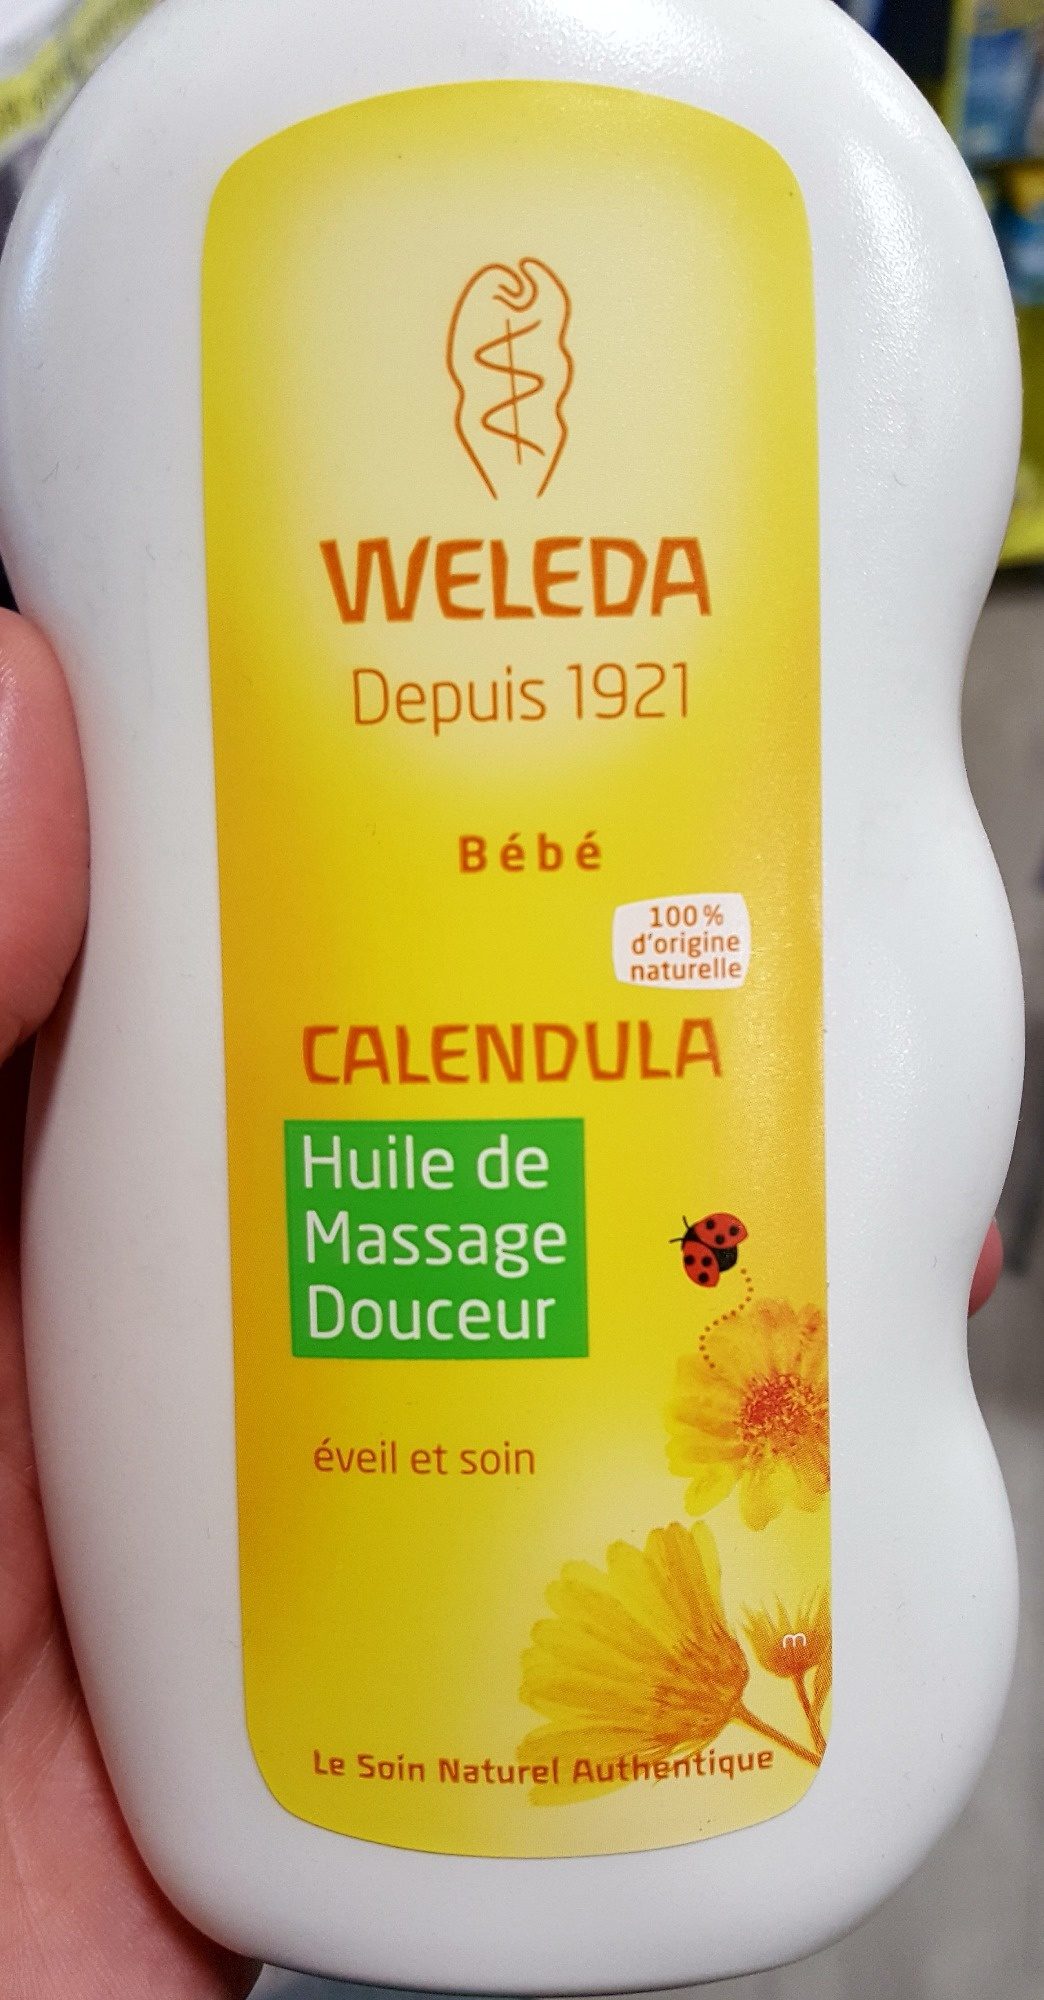 Weleda Bébé Calendula - Huile de Massage Douceur - Produit - fr